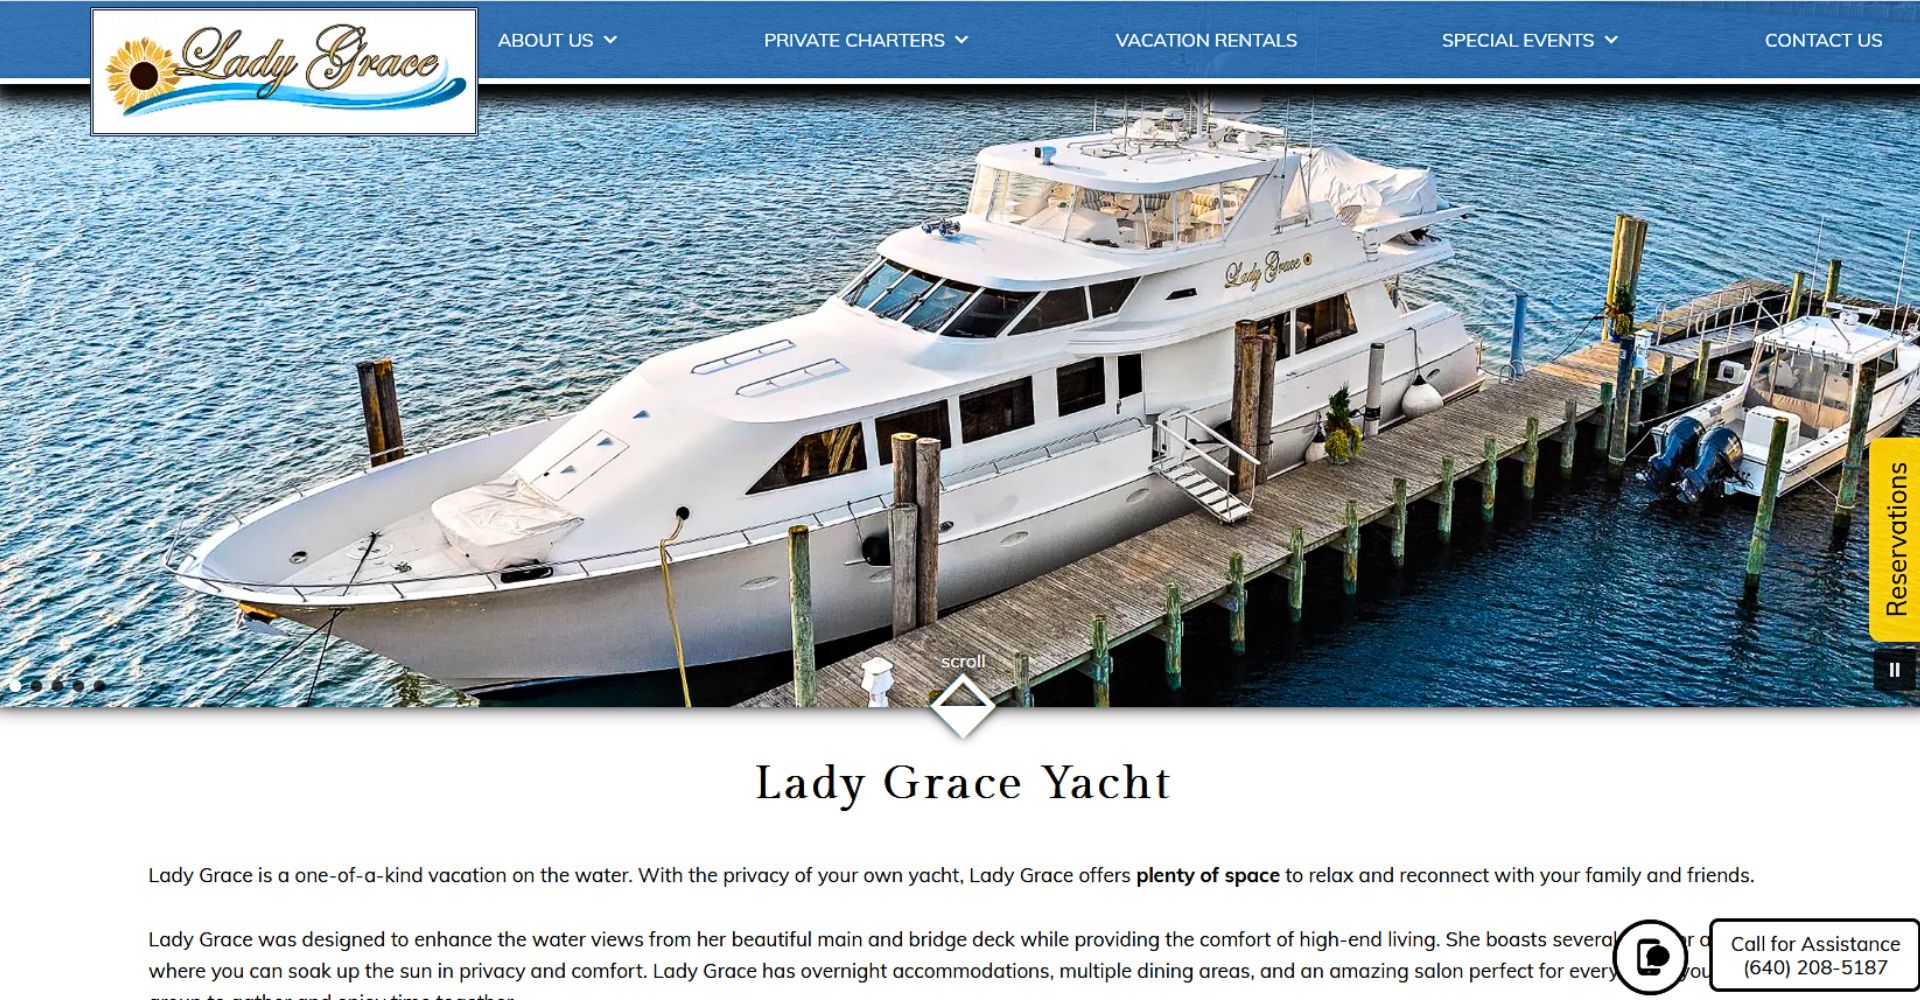 Lady Grace Yacht - Acorn Marketing Deluxe Website design.